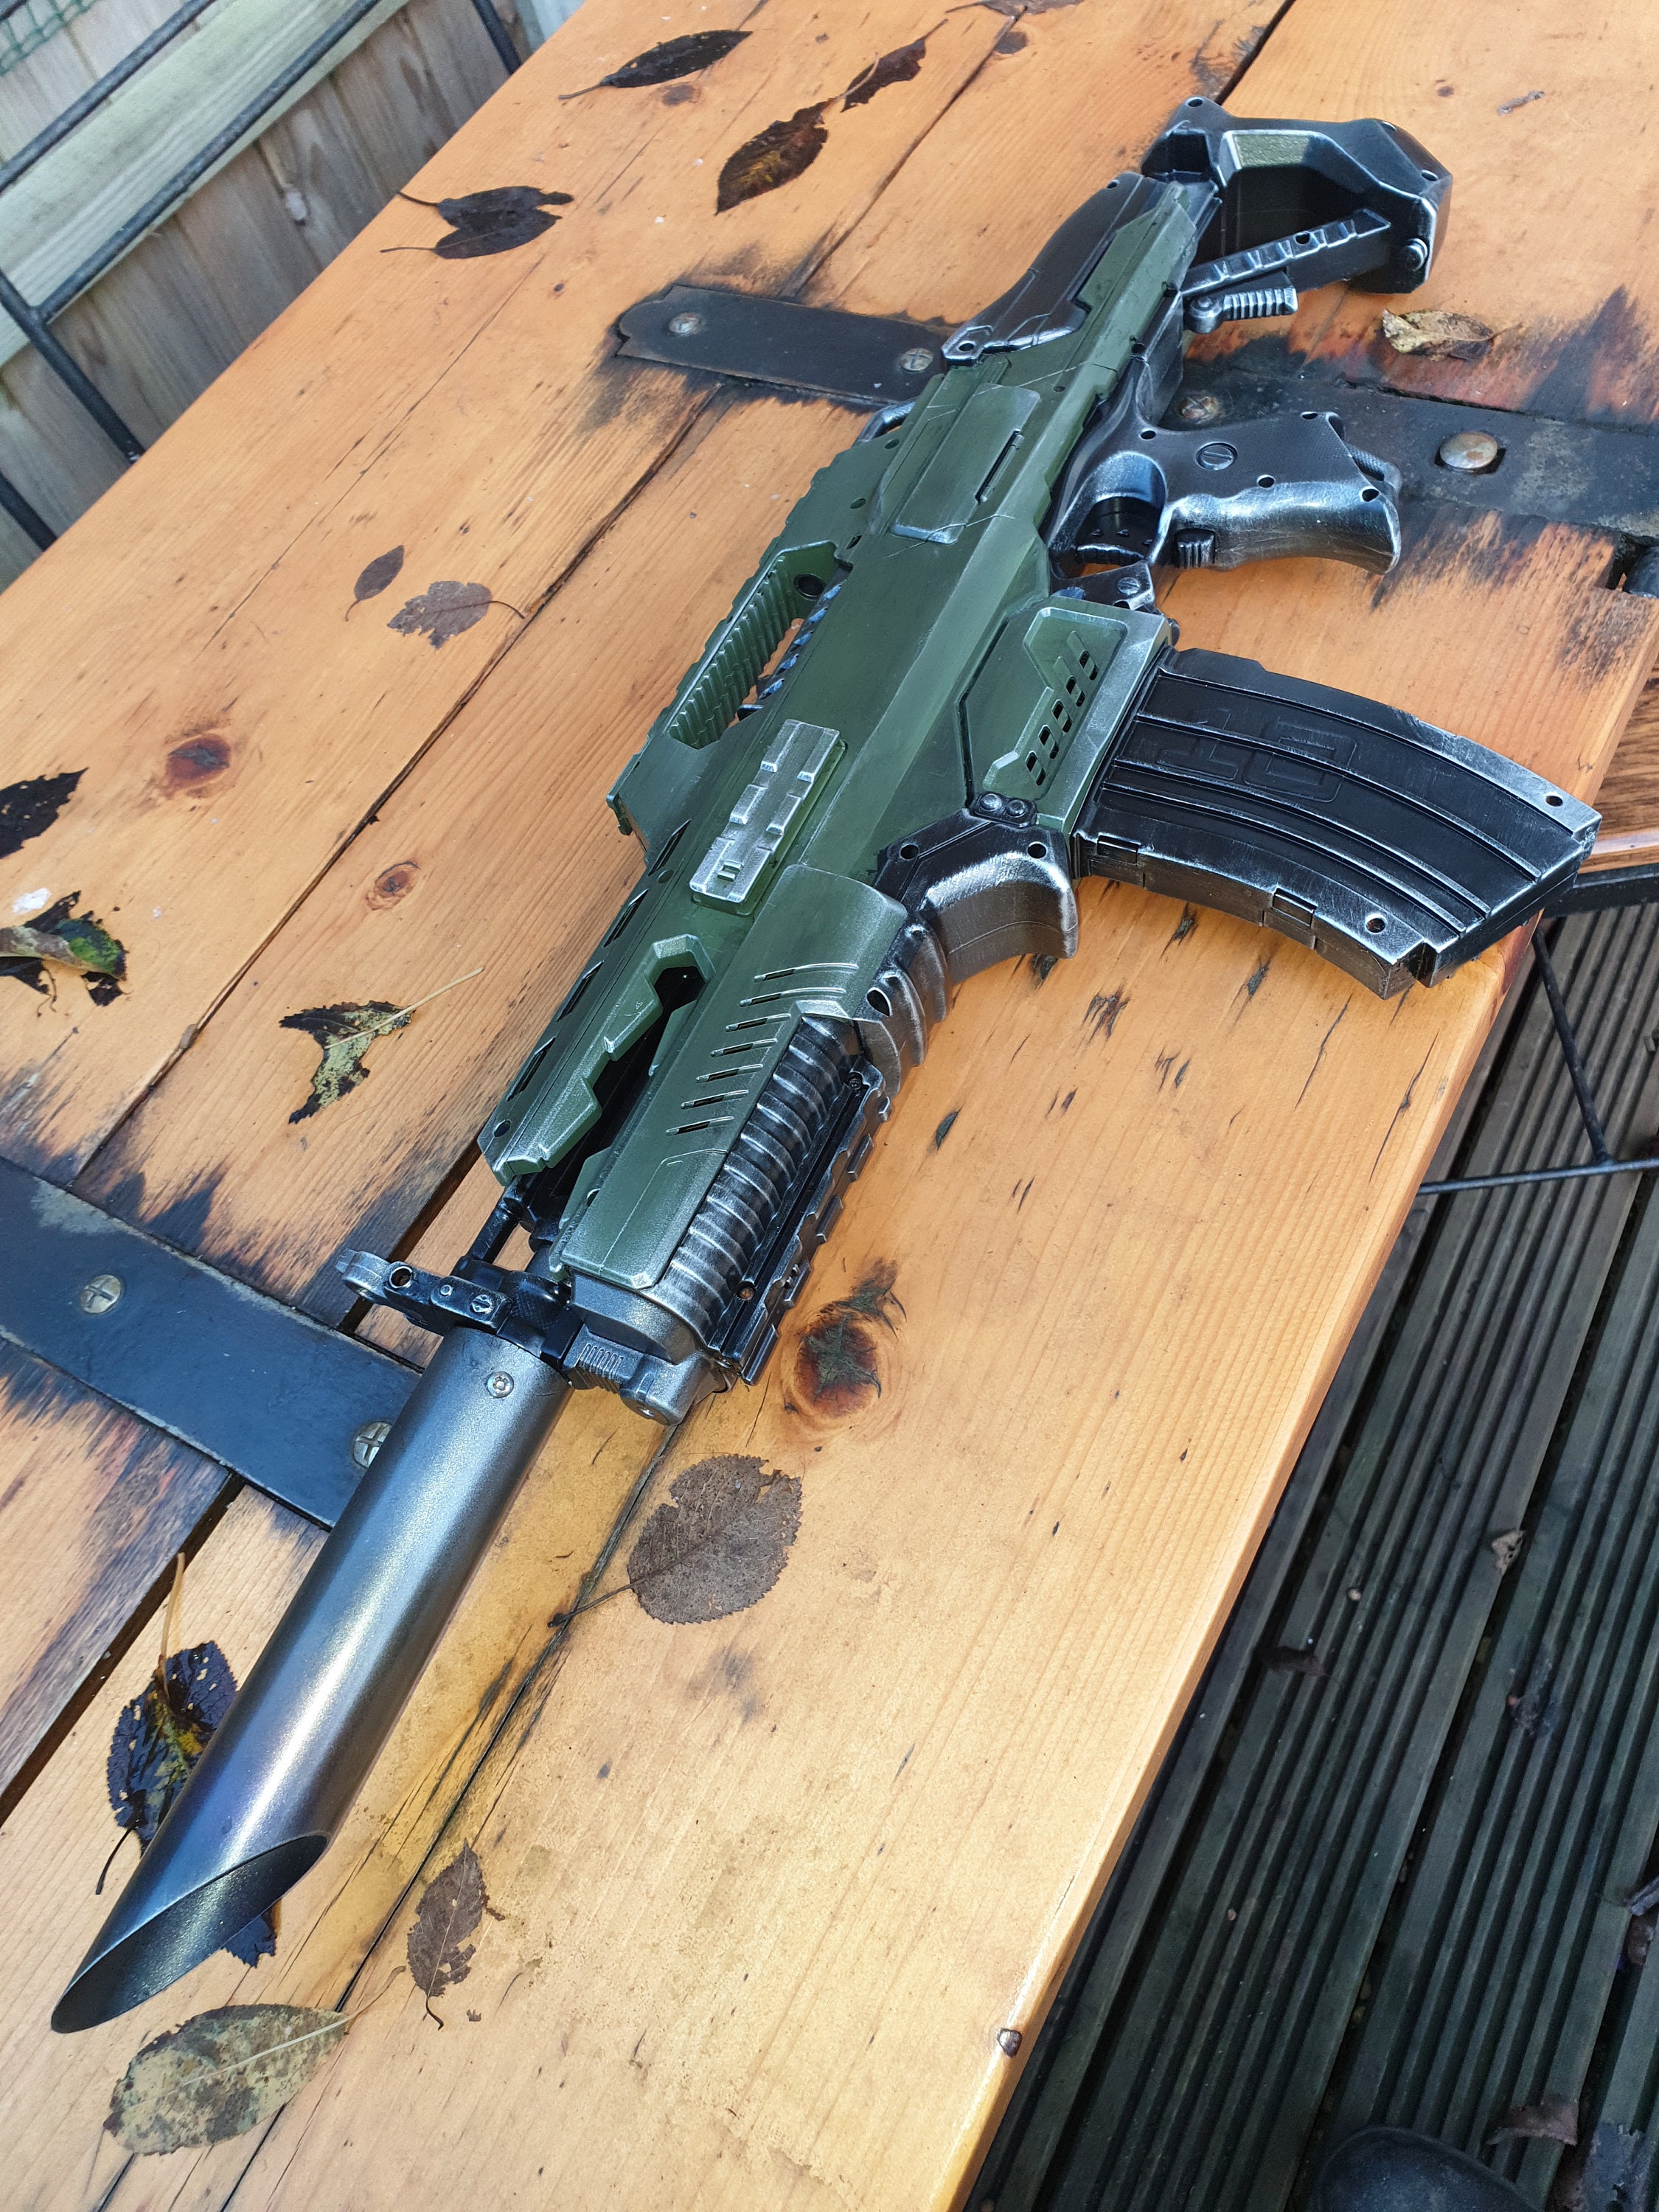 Nerf Elite Infinus automatic gun capacity 30 toy store - AliExpress